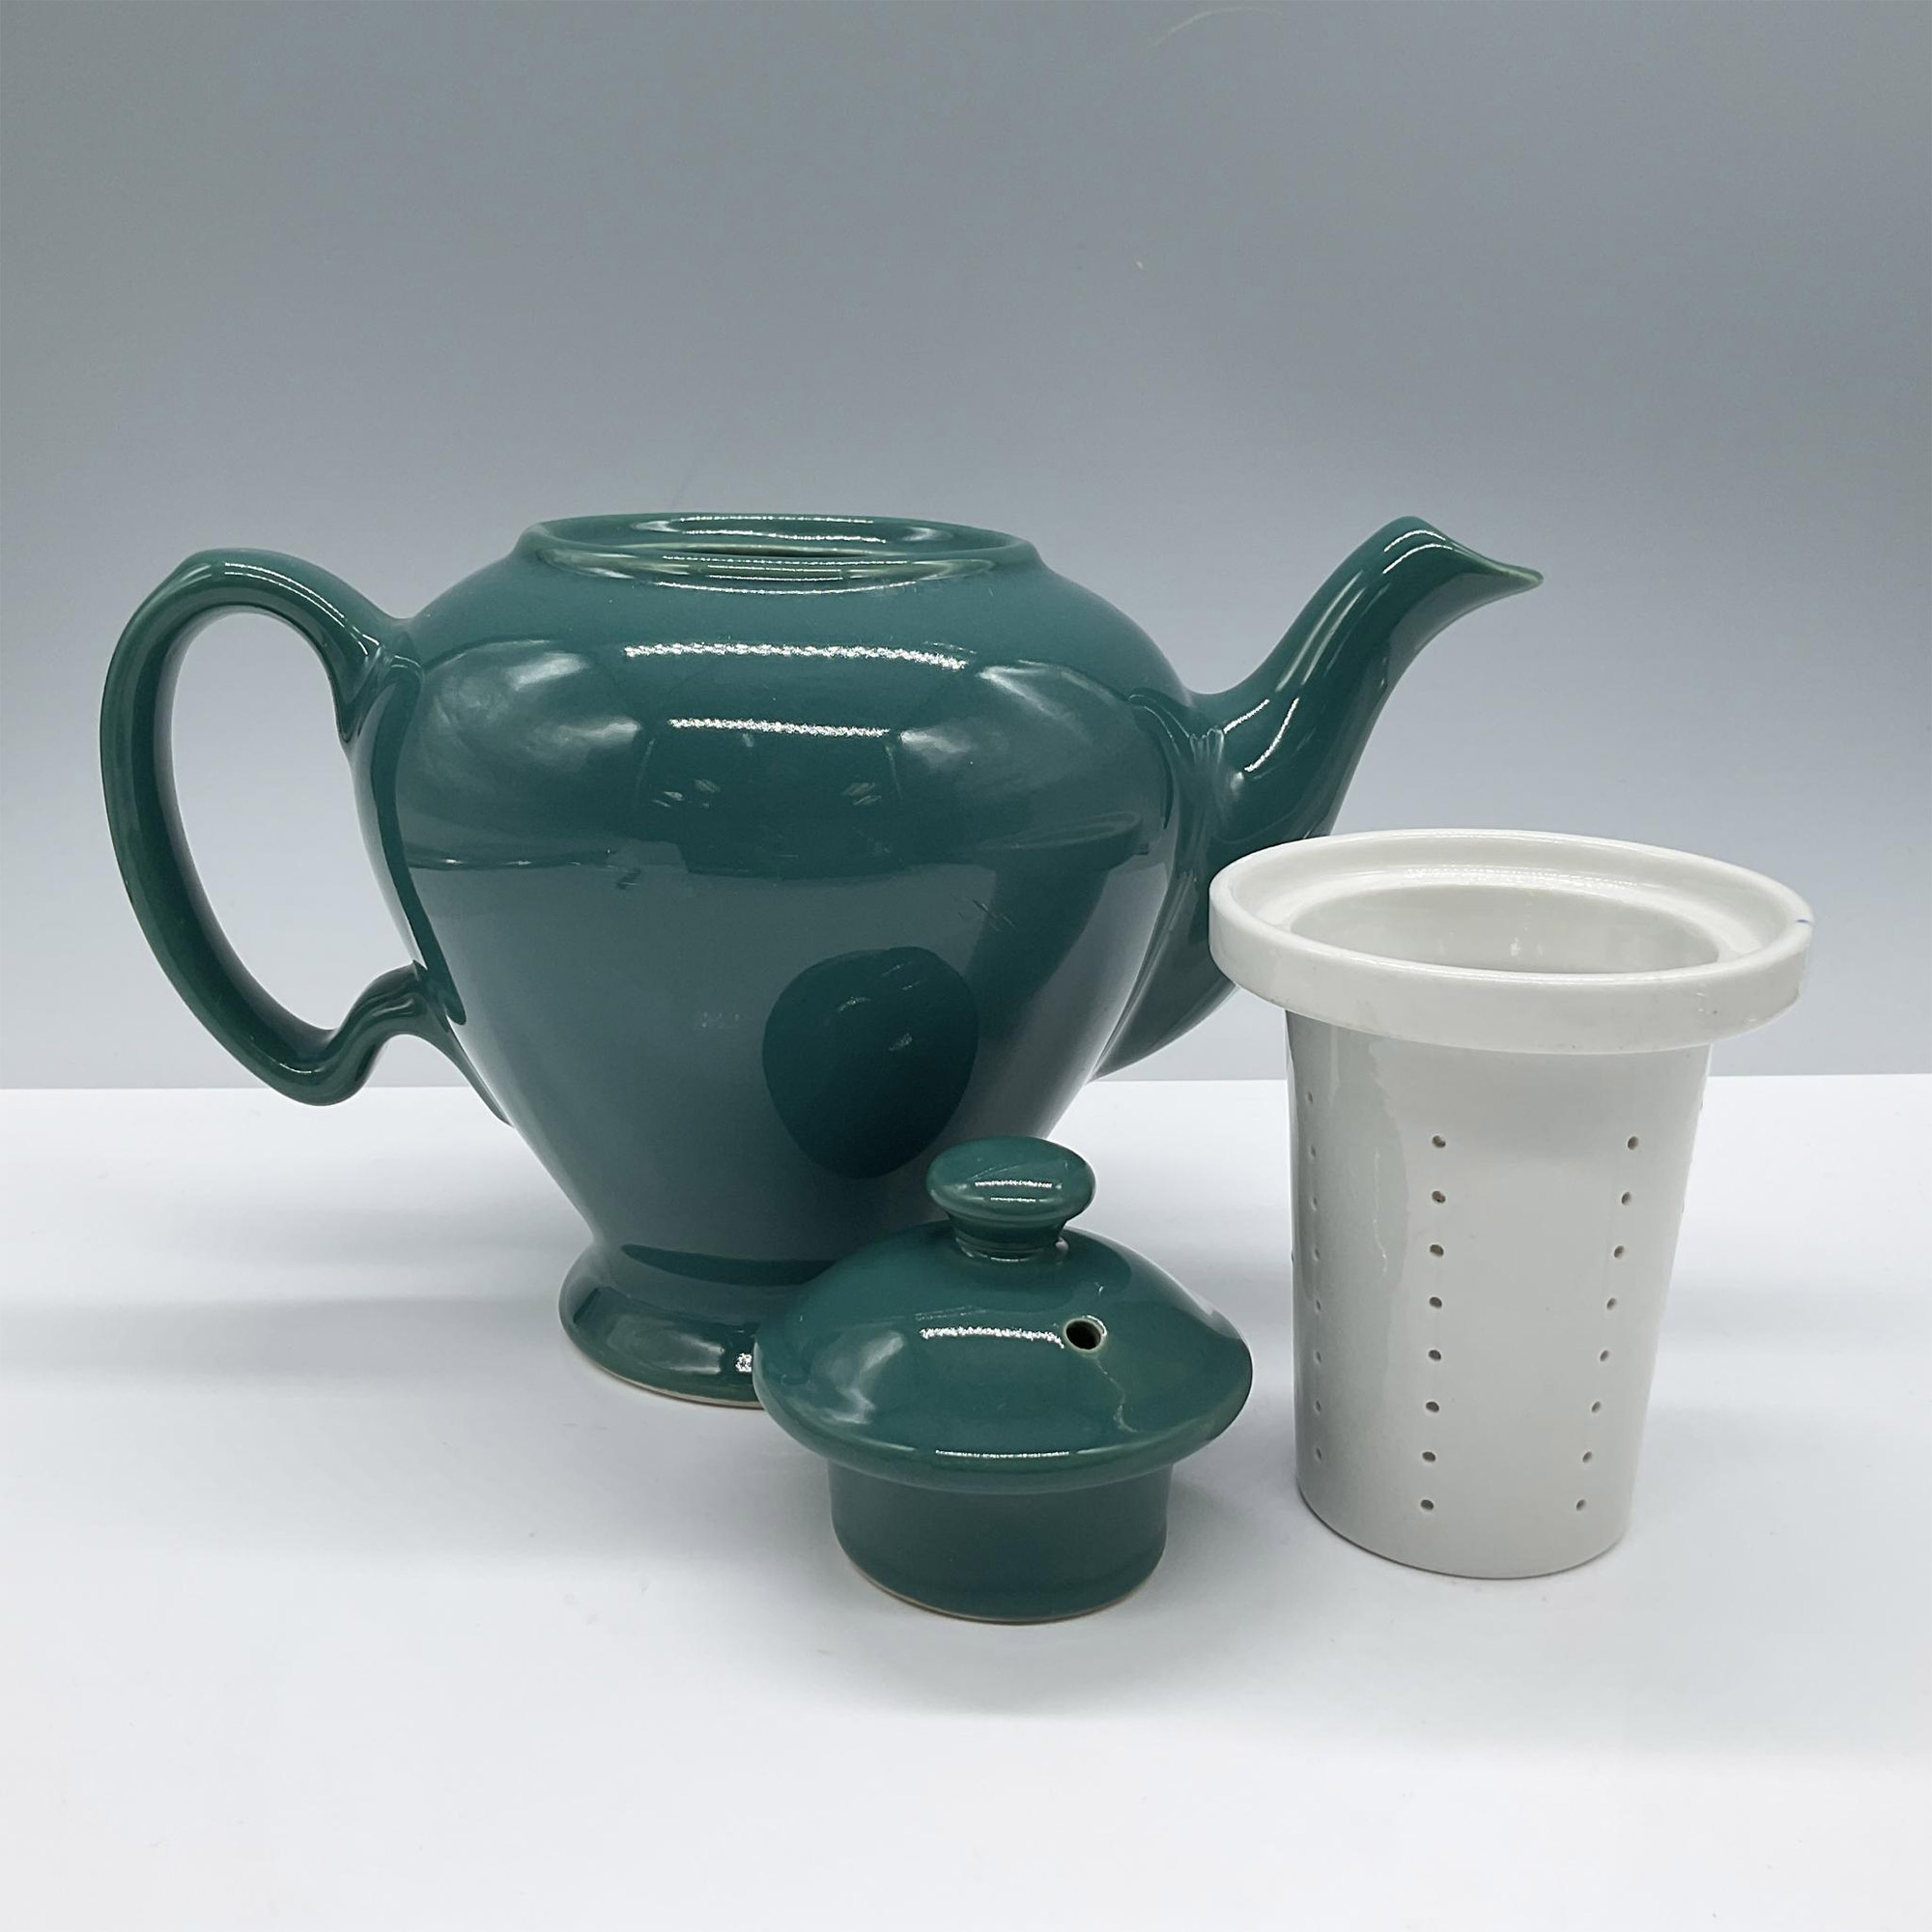 McCormick Porcelain Lidded Tea Pot with Infuser, Baltimore - Image 2 of 3